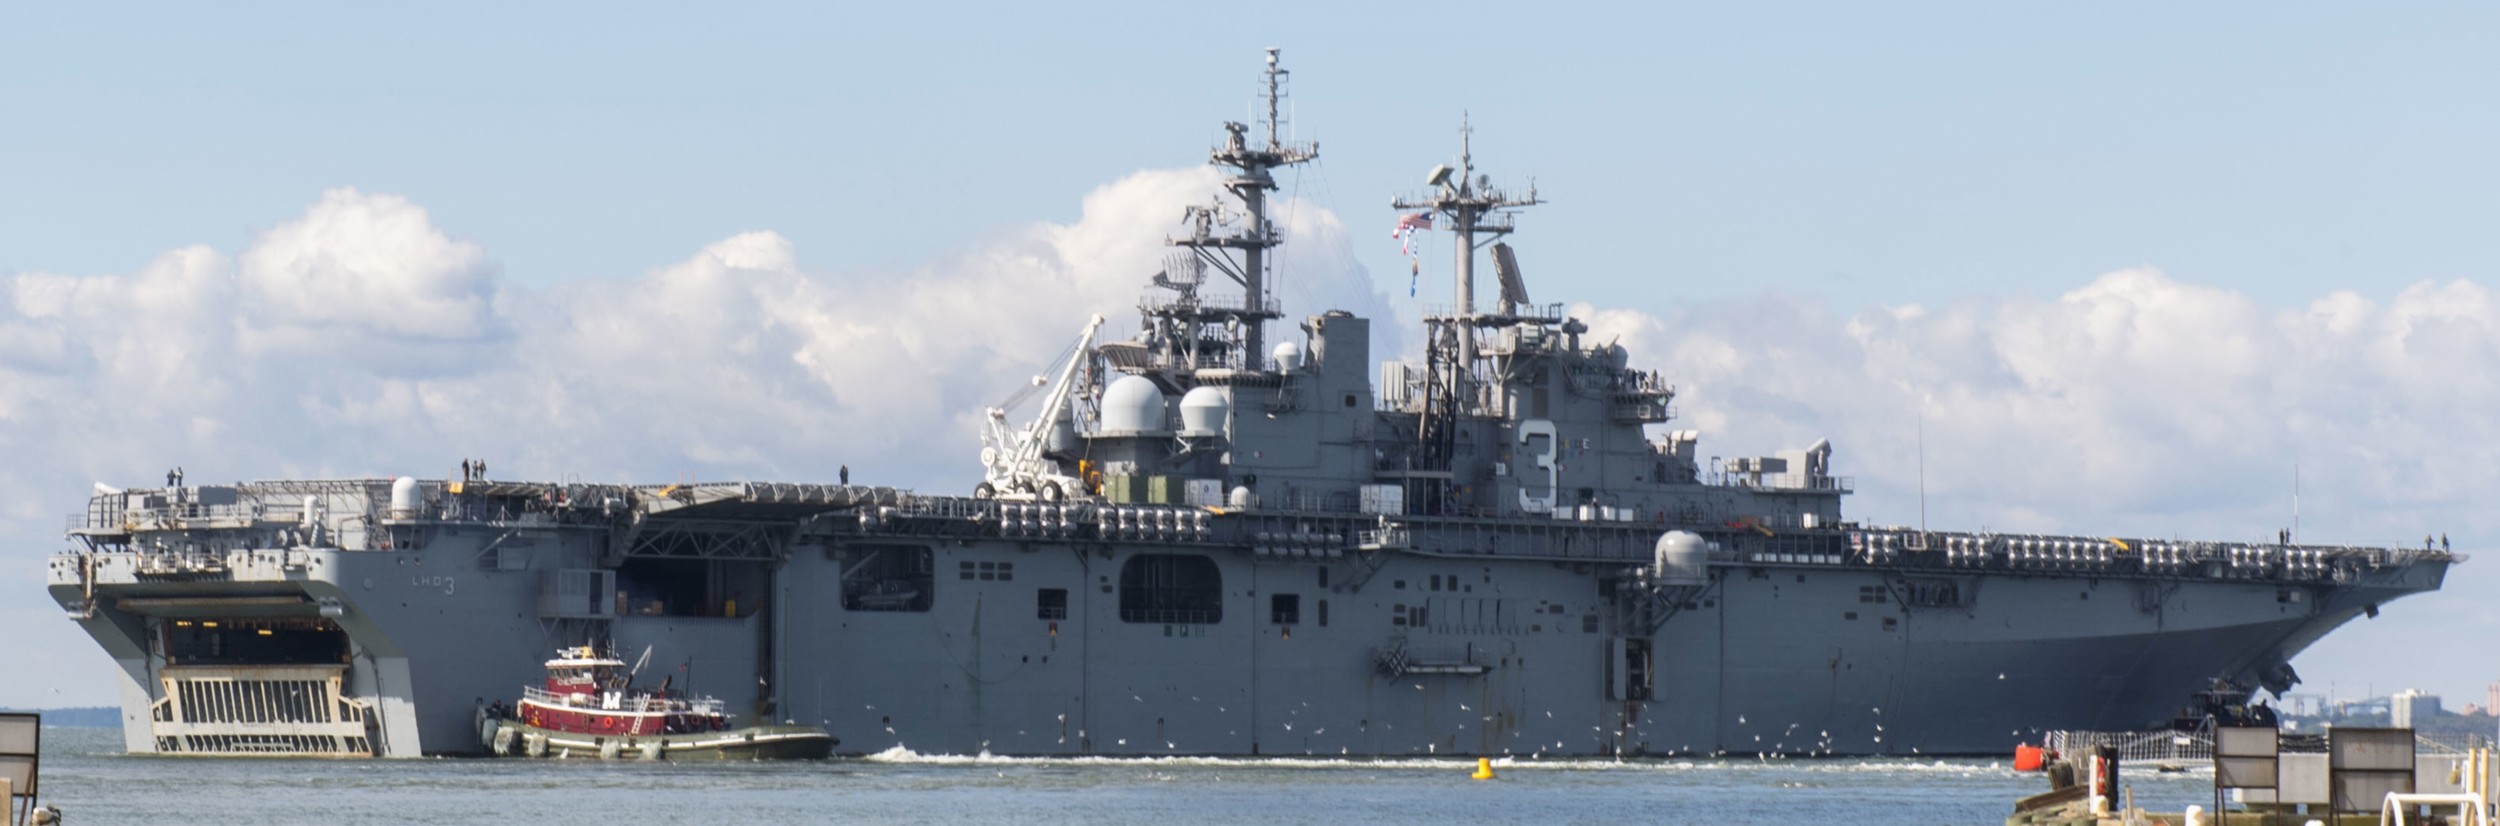 lhd-3 uss kearsarge wasp class amphibious assault ship landing dock us navy marines departing norfolk virginia 192